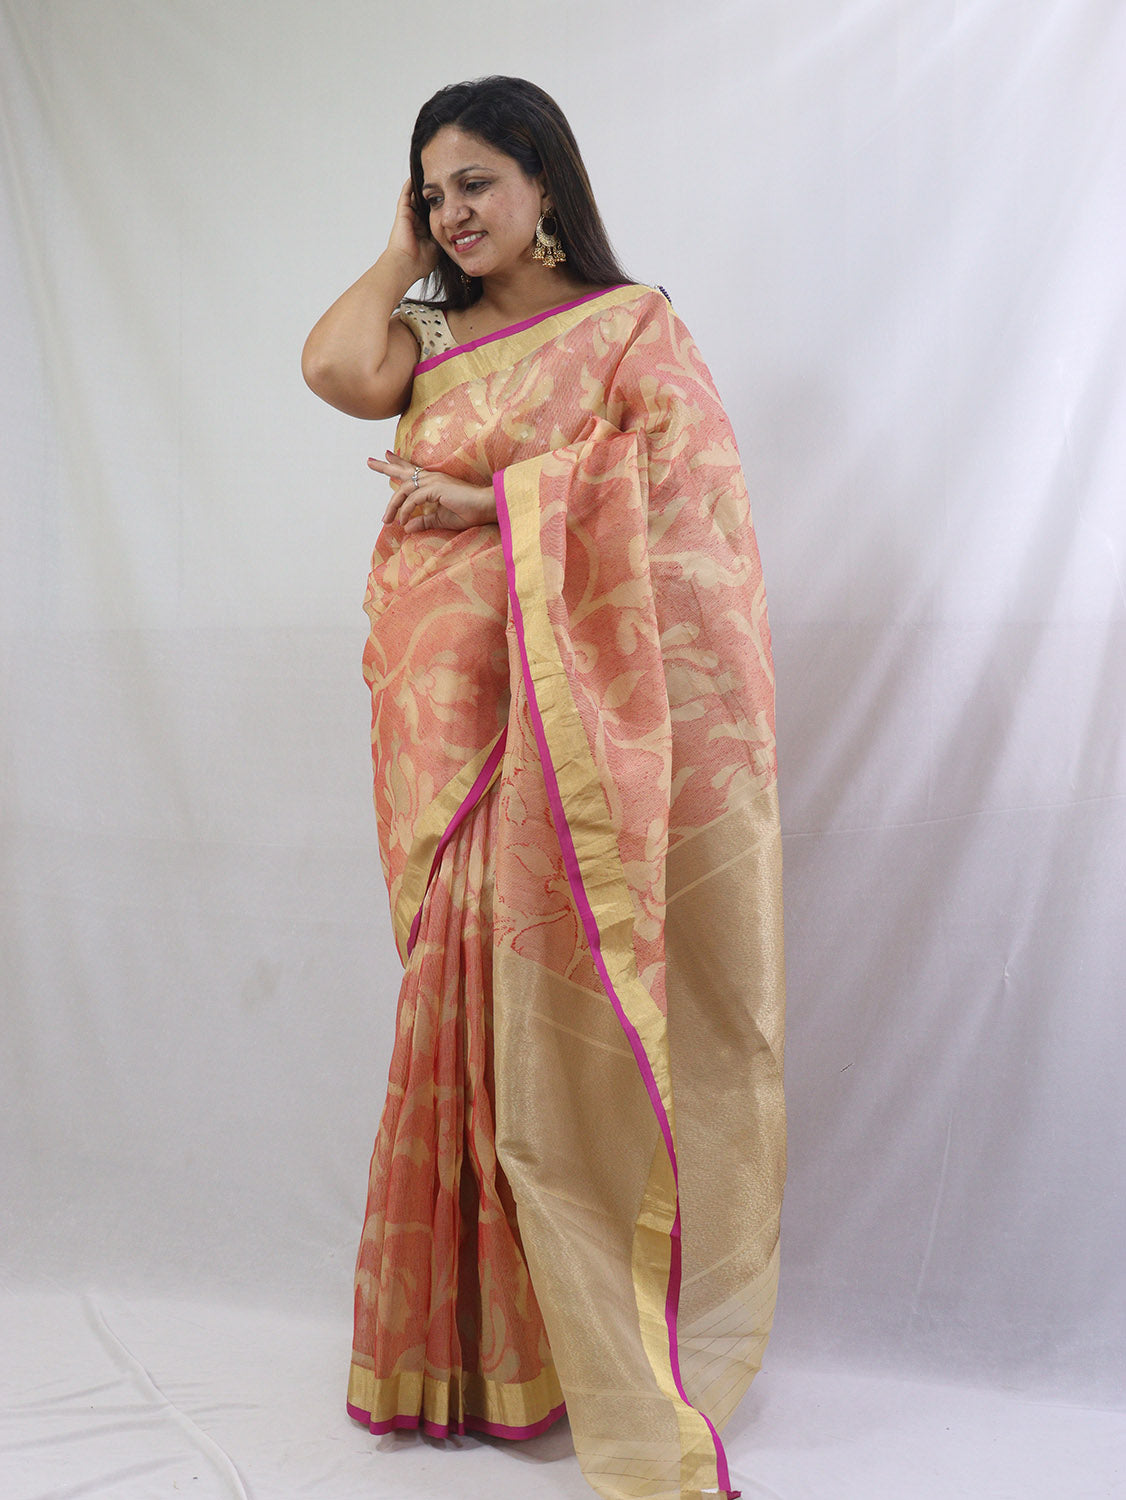 Exquisite Orange Handloom Banarasi Kora Silk Saree - Perfect for Any Occasion!